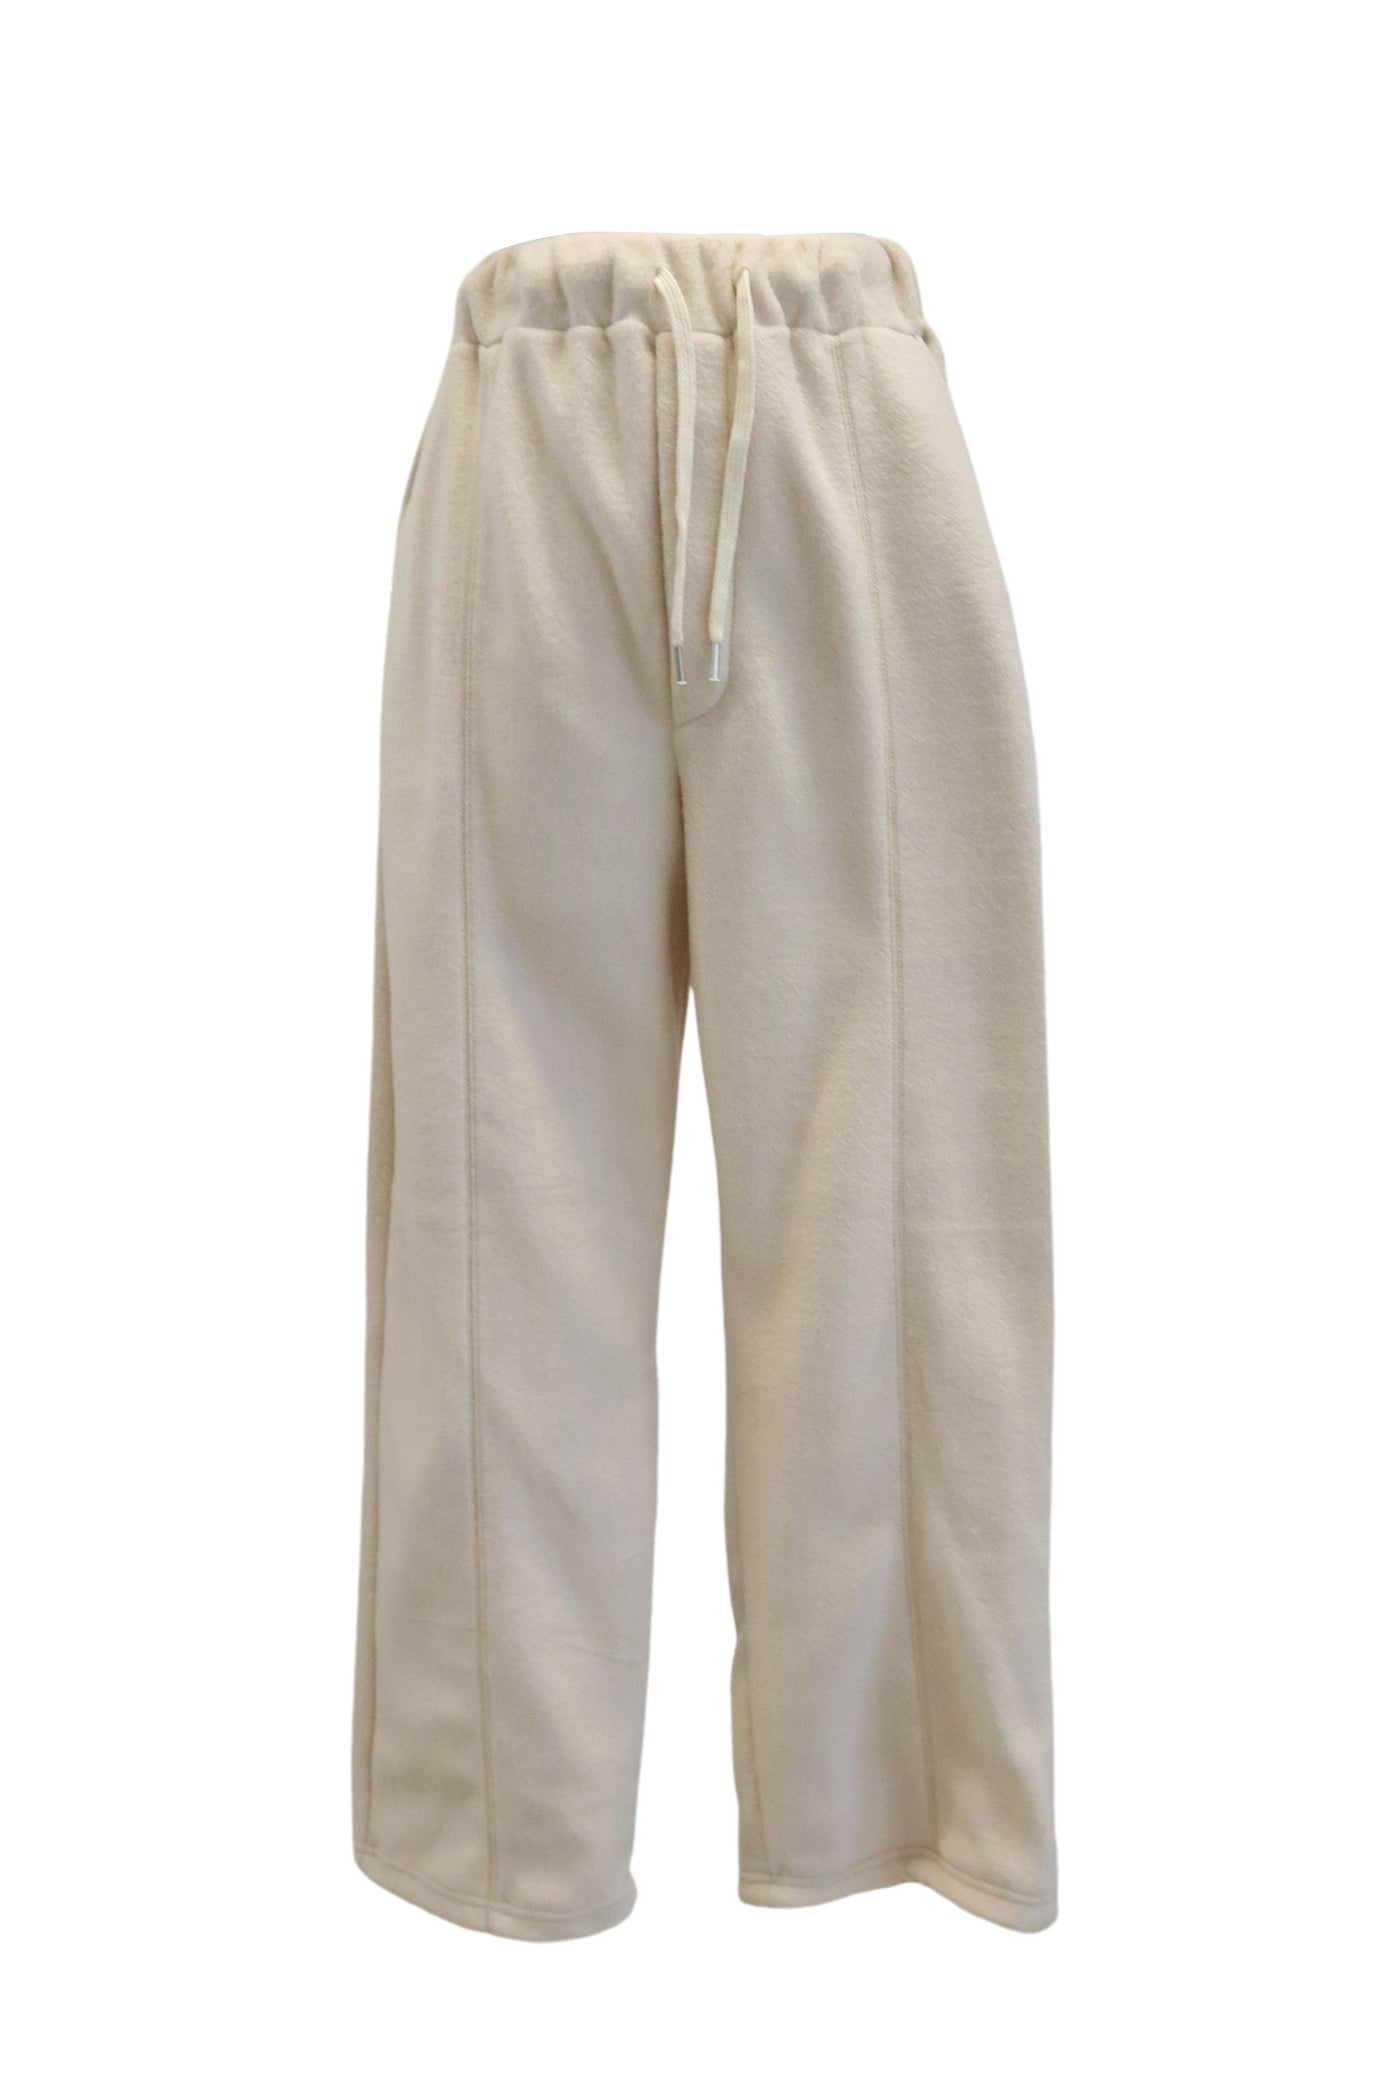 storets.com Sierra Oversized Fleece Pants